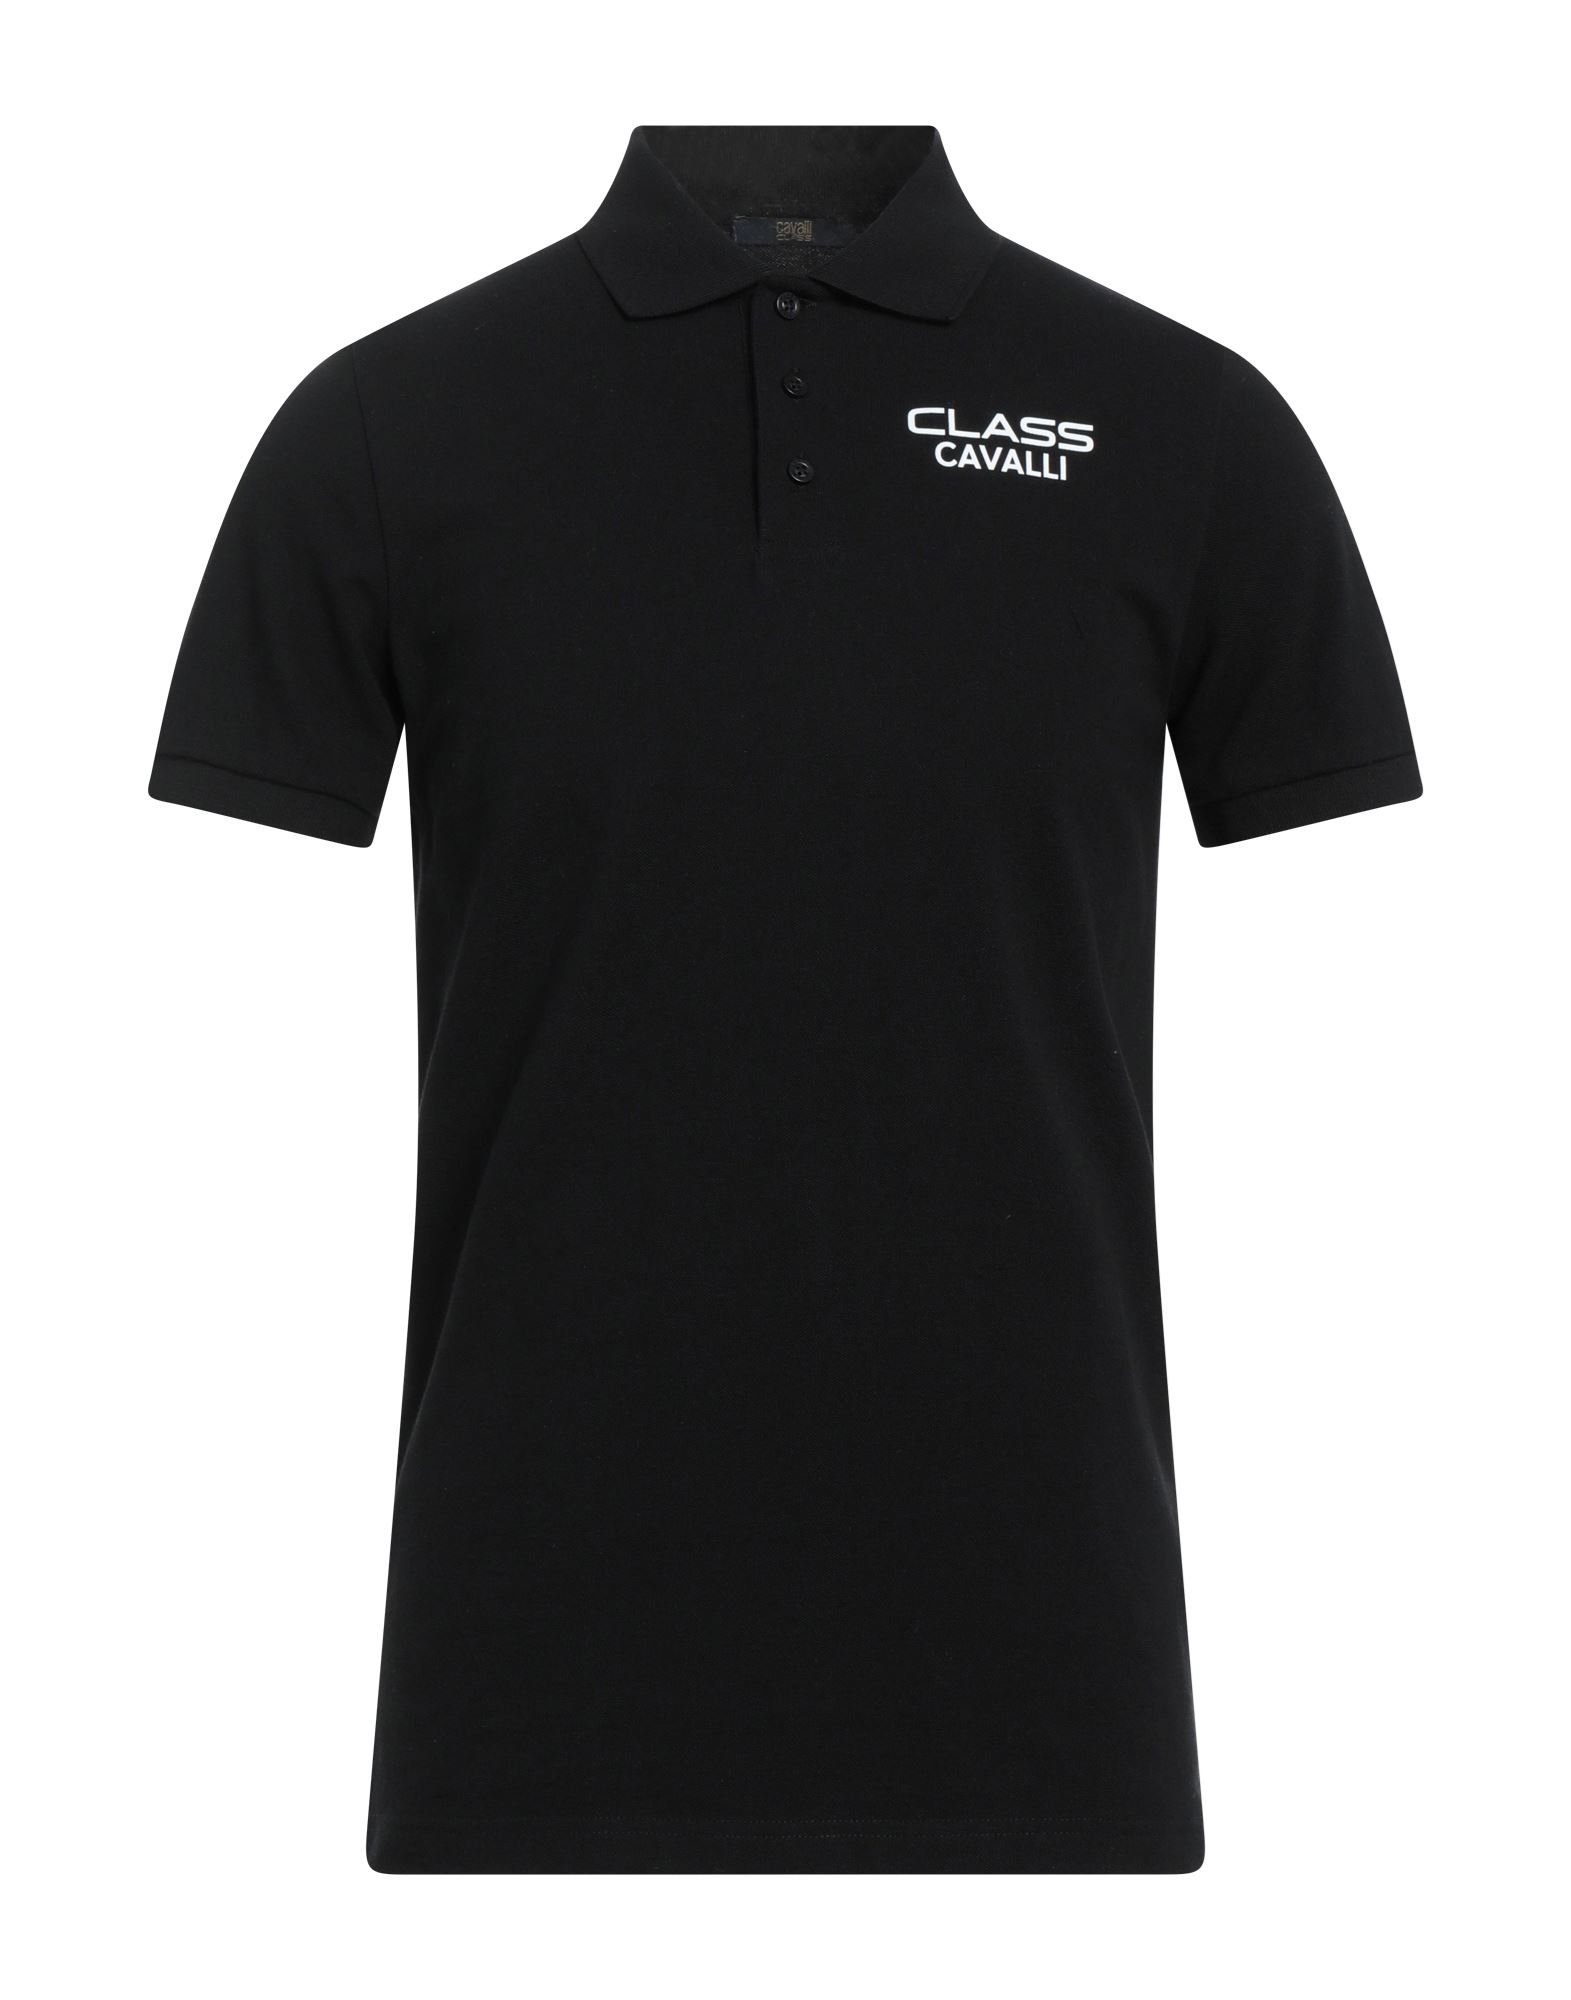 Cavalli Class Polo Shirts In Black